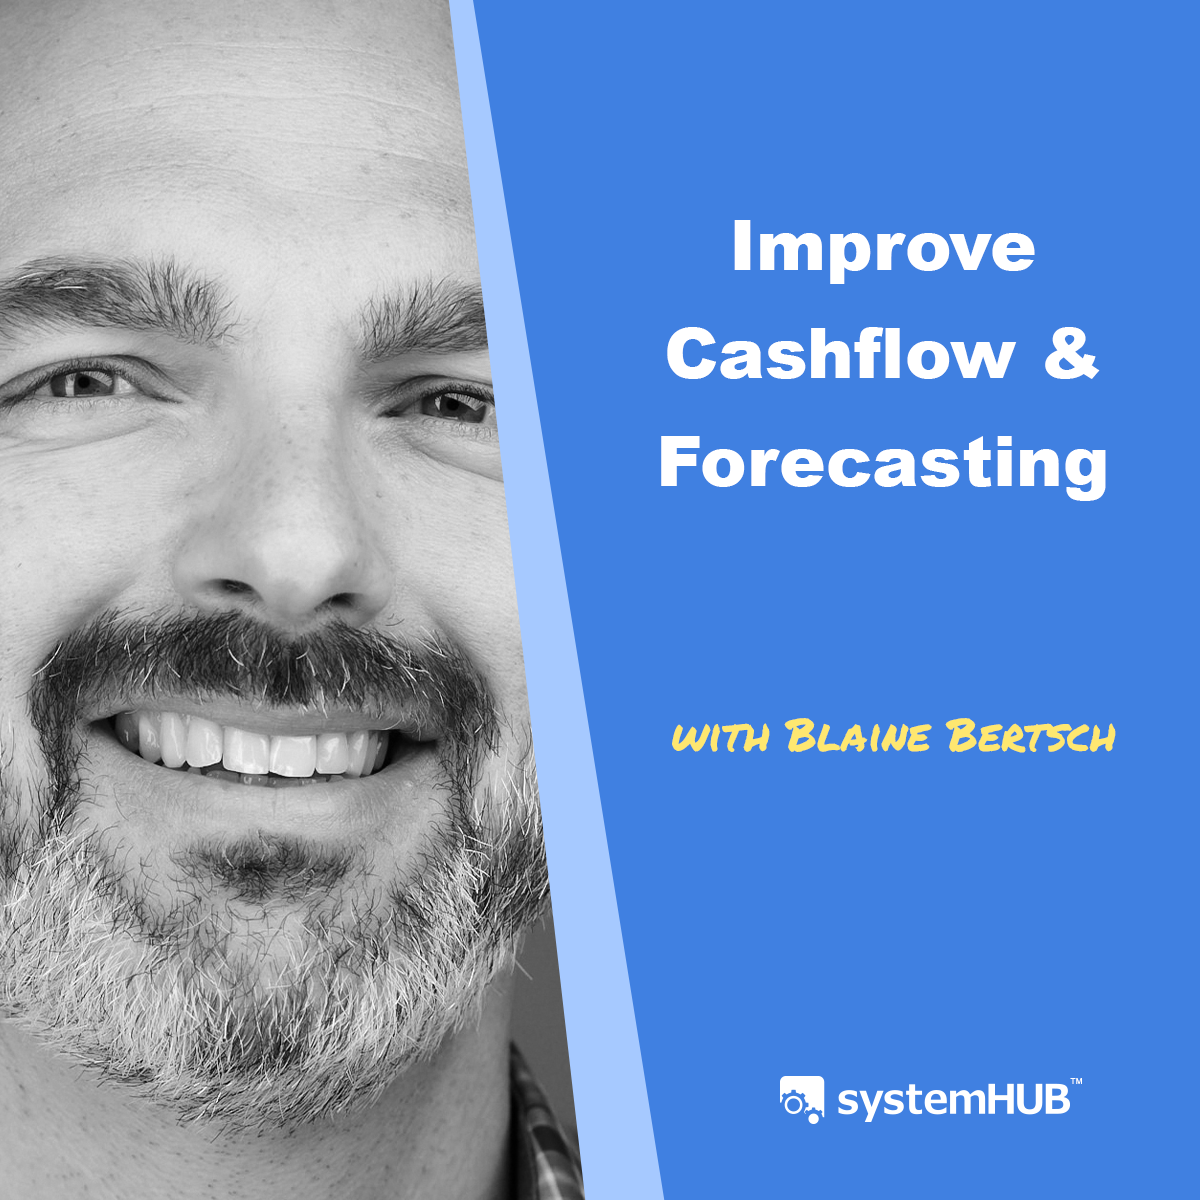 Operational Cashflow & Future Forecasting System with Blaine Bertsch